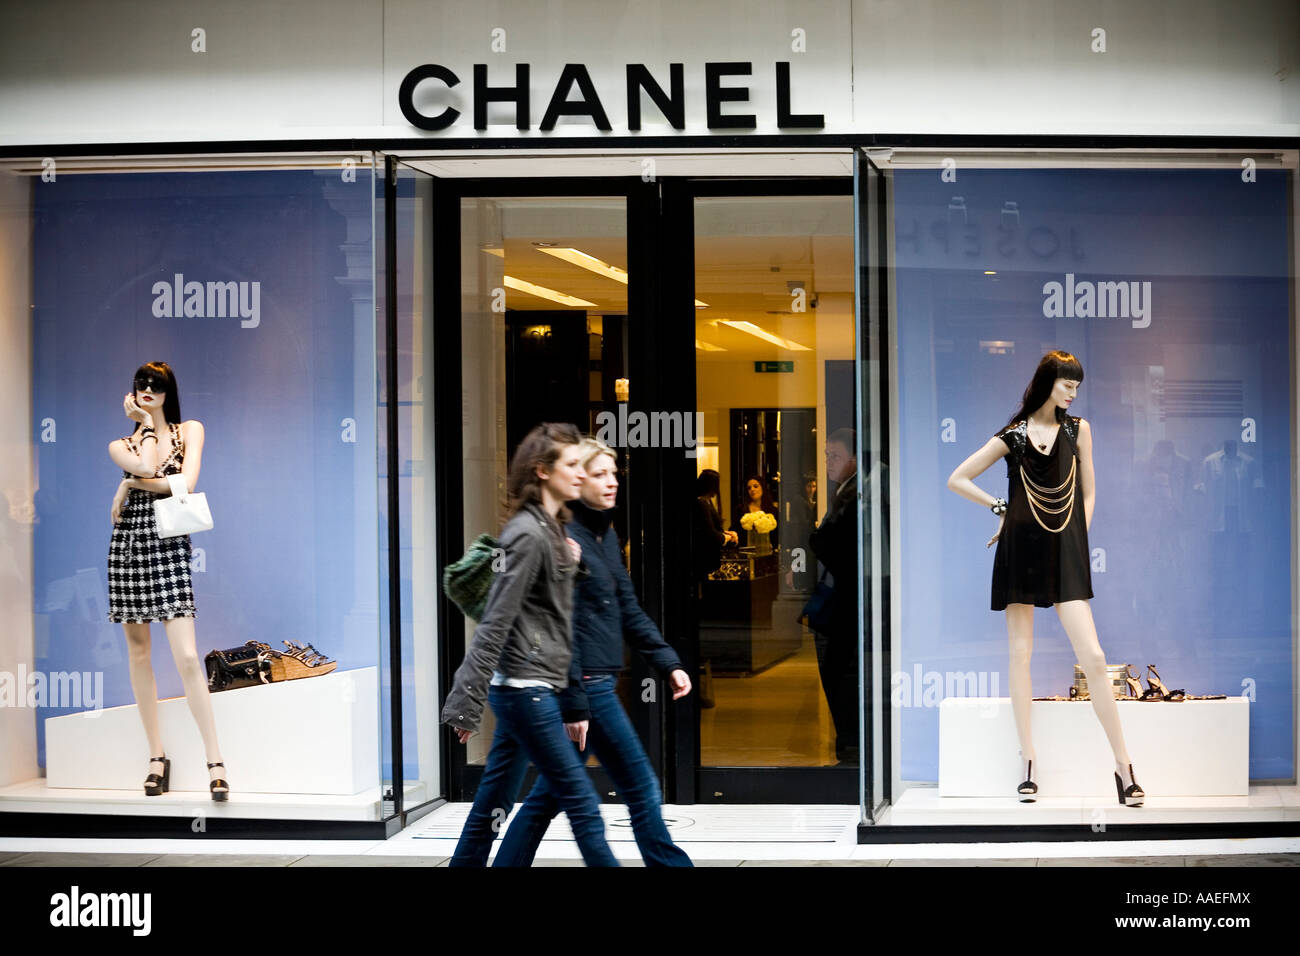 Chanel store on New Bond Street London Stock Photo, Royalty Free Image ...